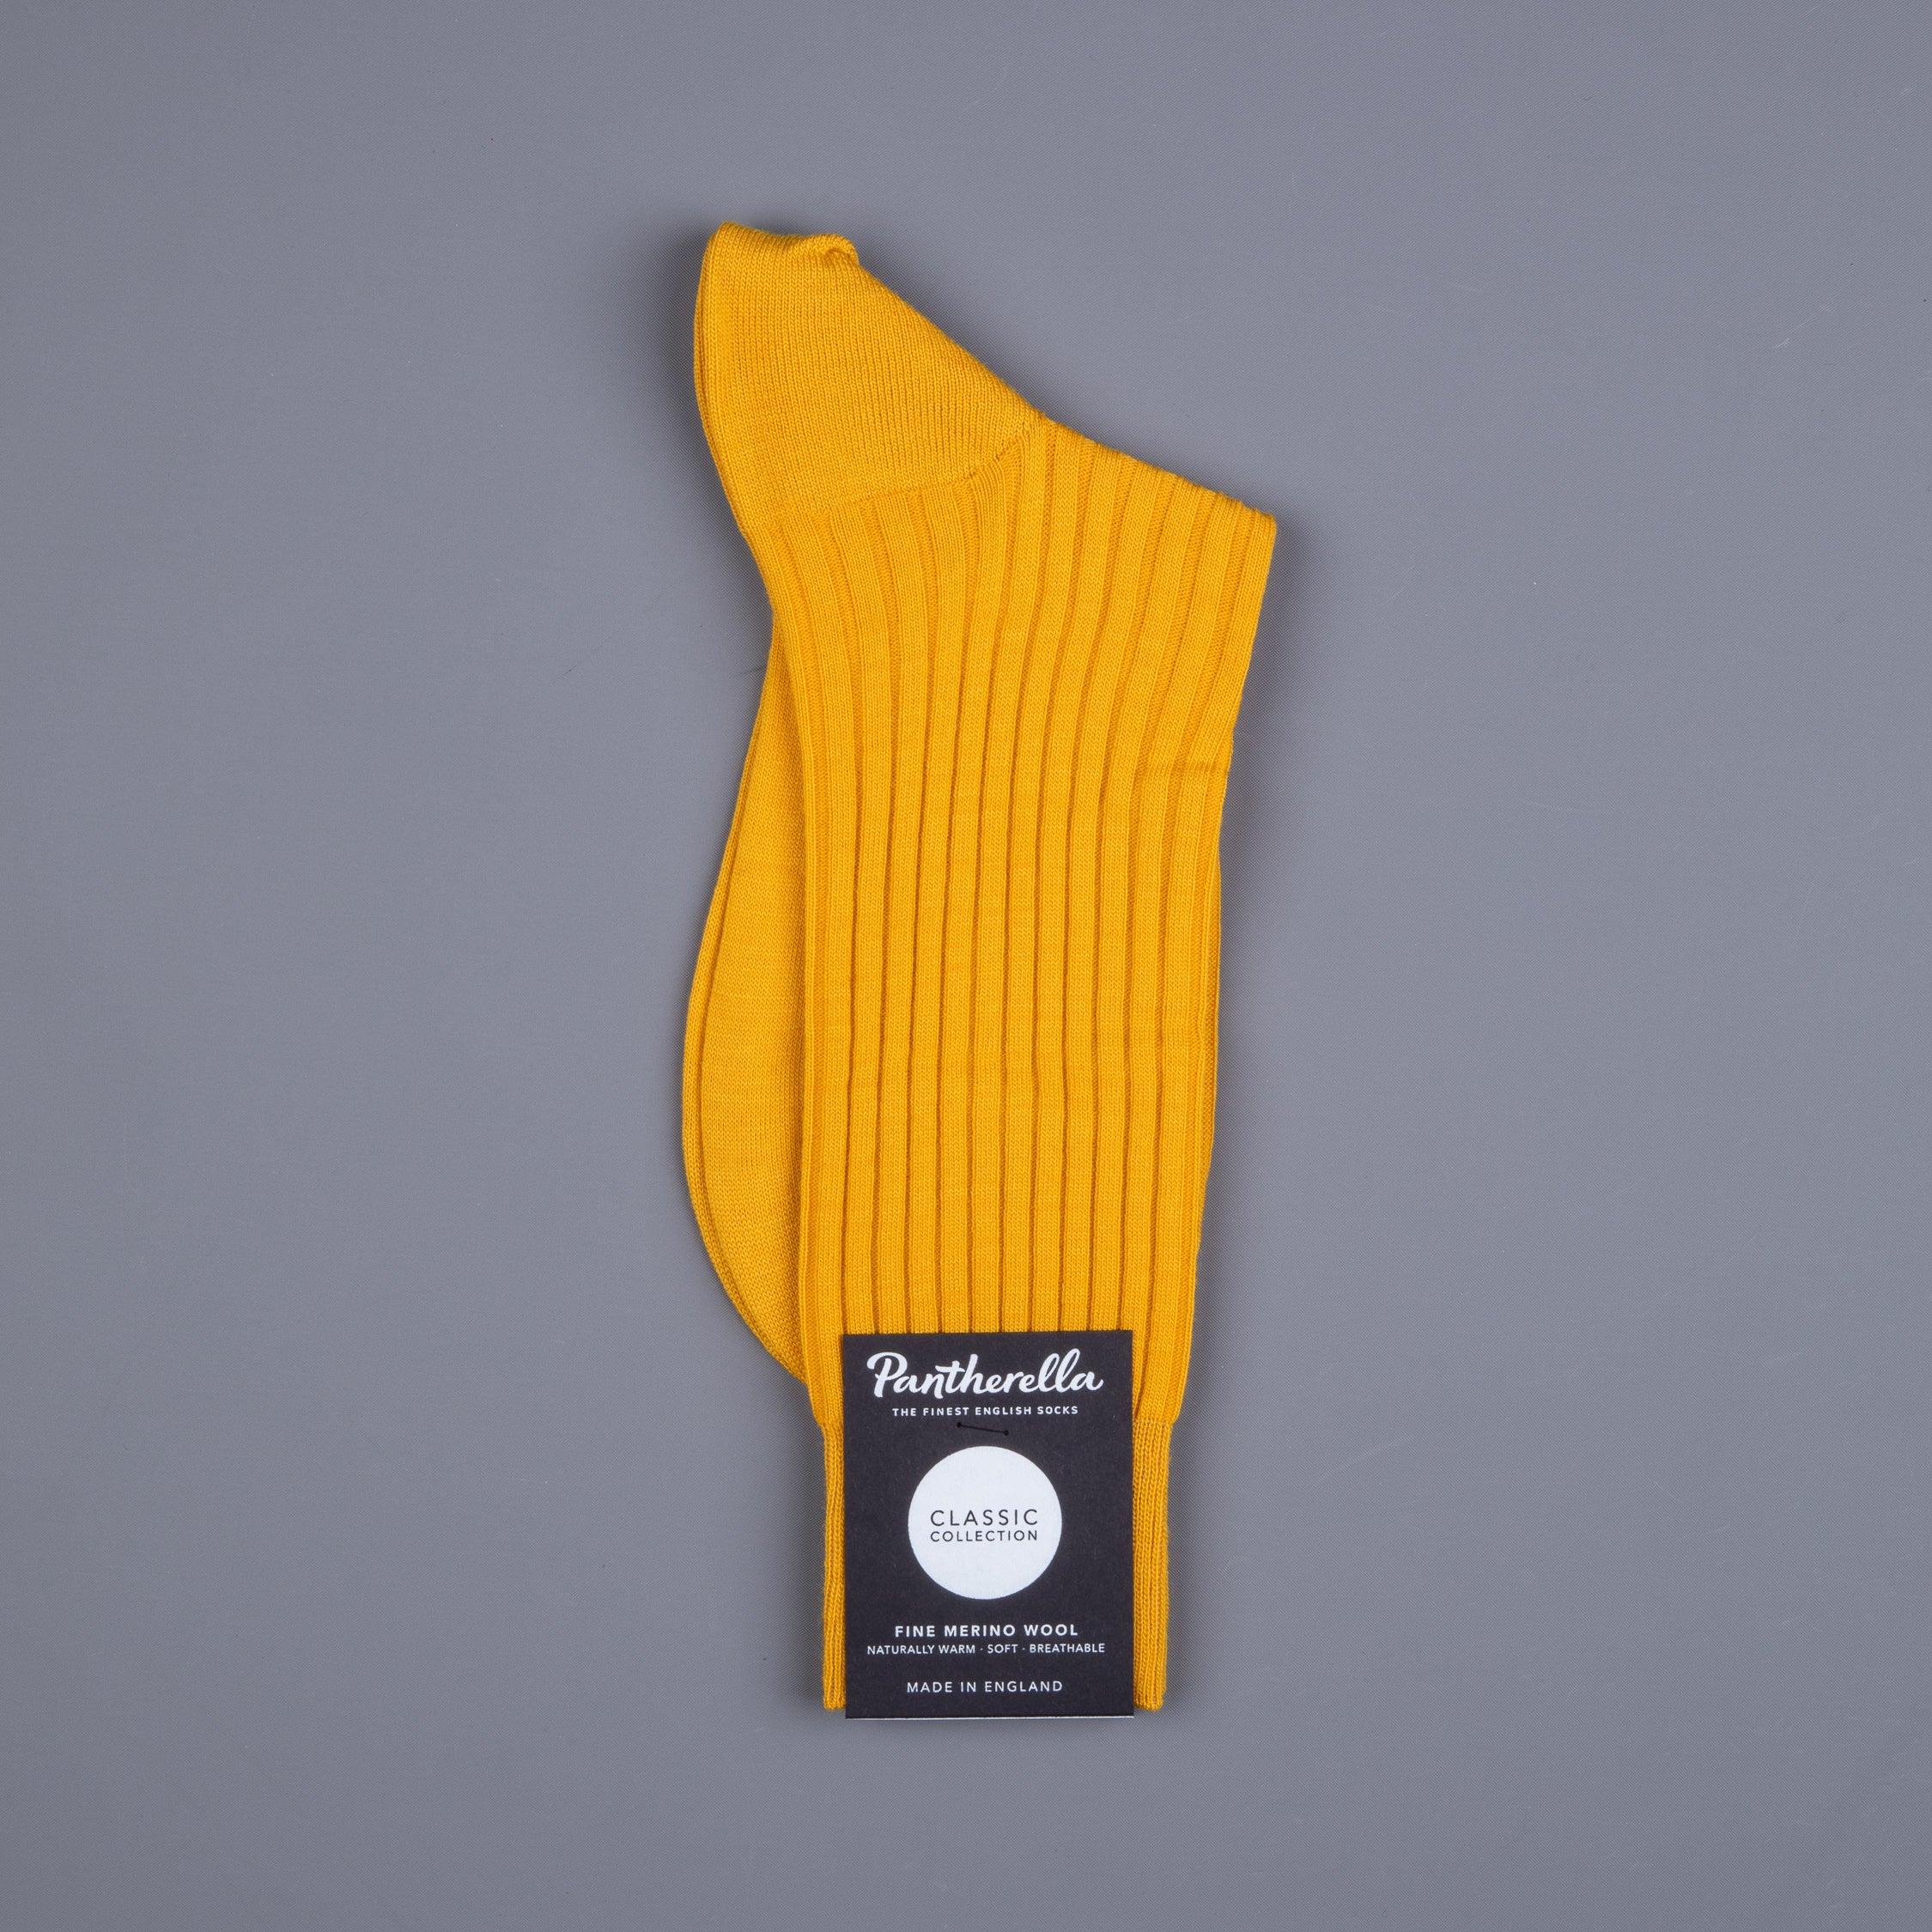 Pantherella Laburnum Merino Wool Ankle High Socks Bright Gold